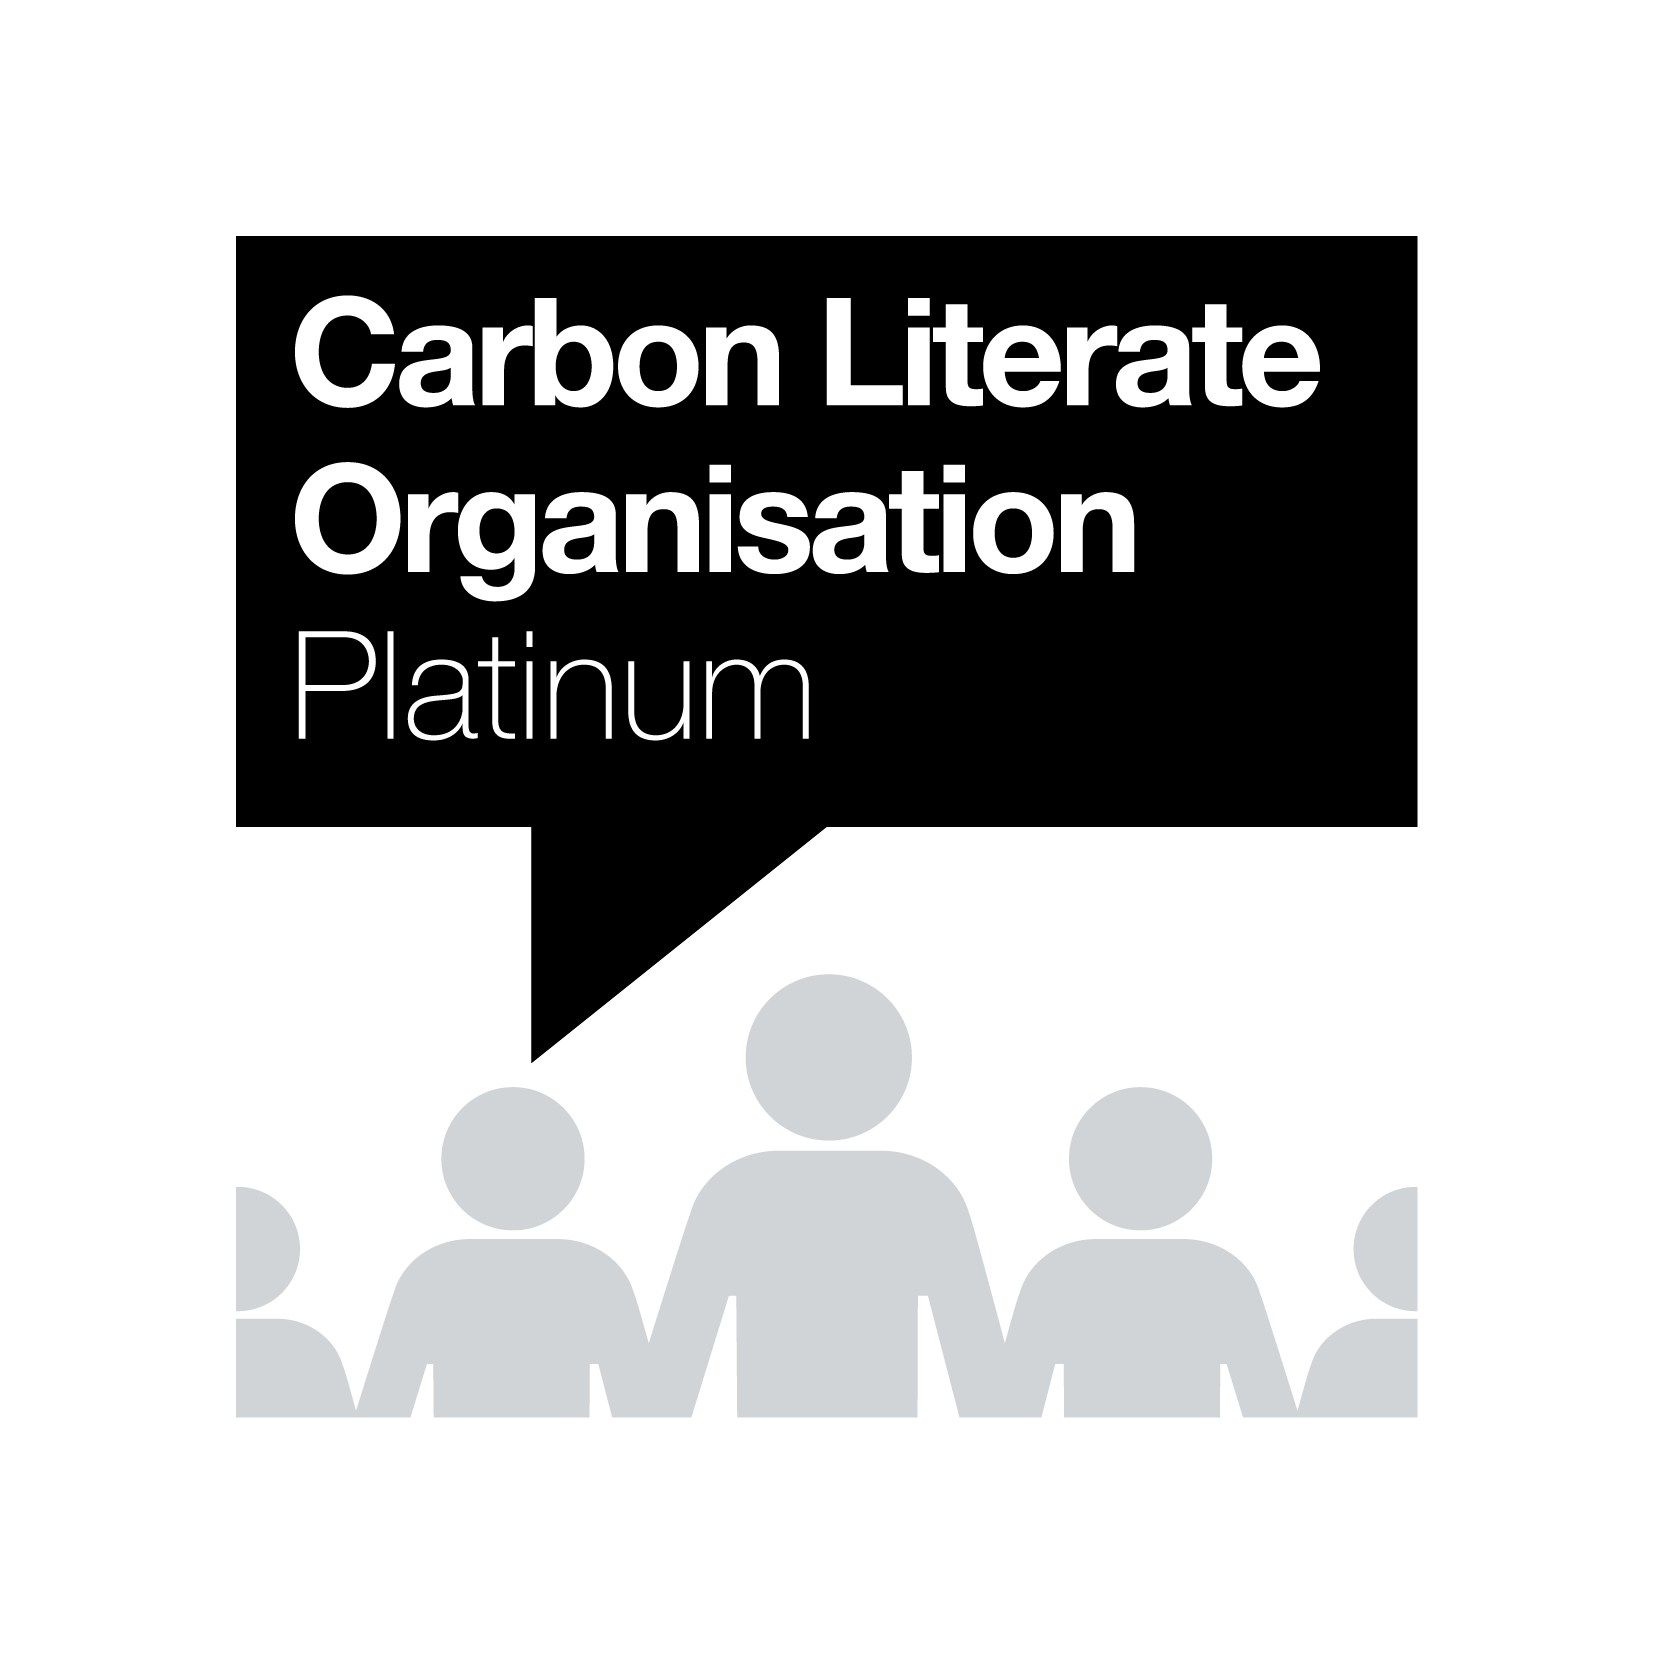 Platiinum Carbon Literate Organisation logo